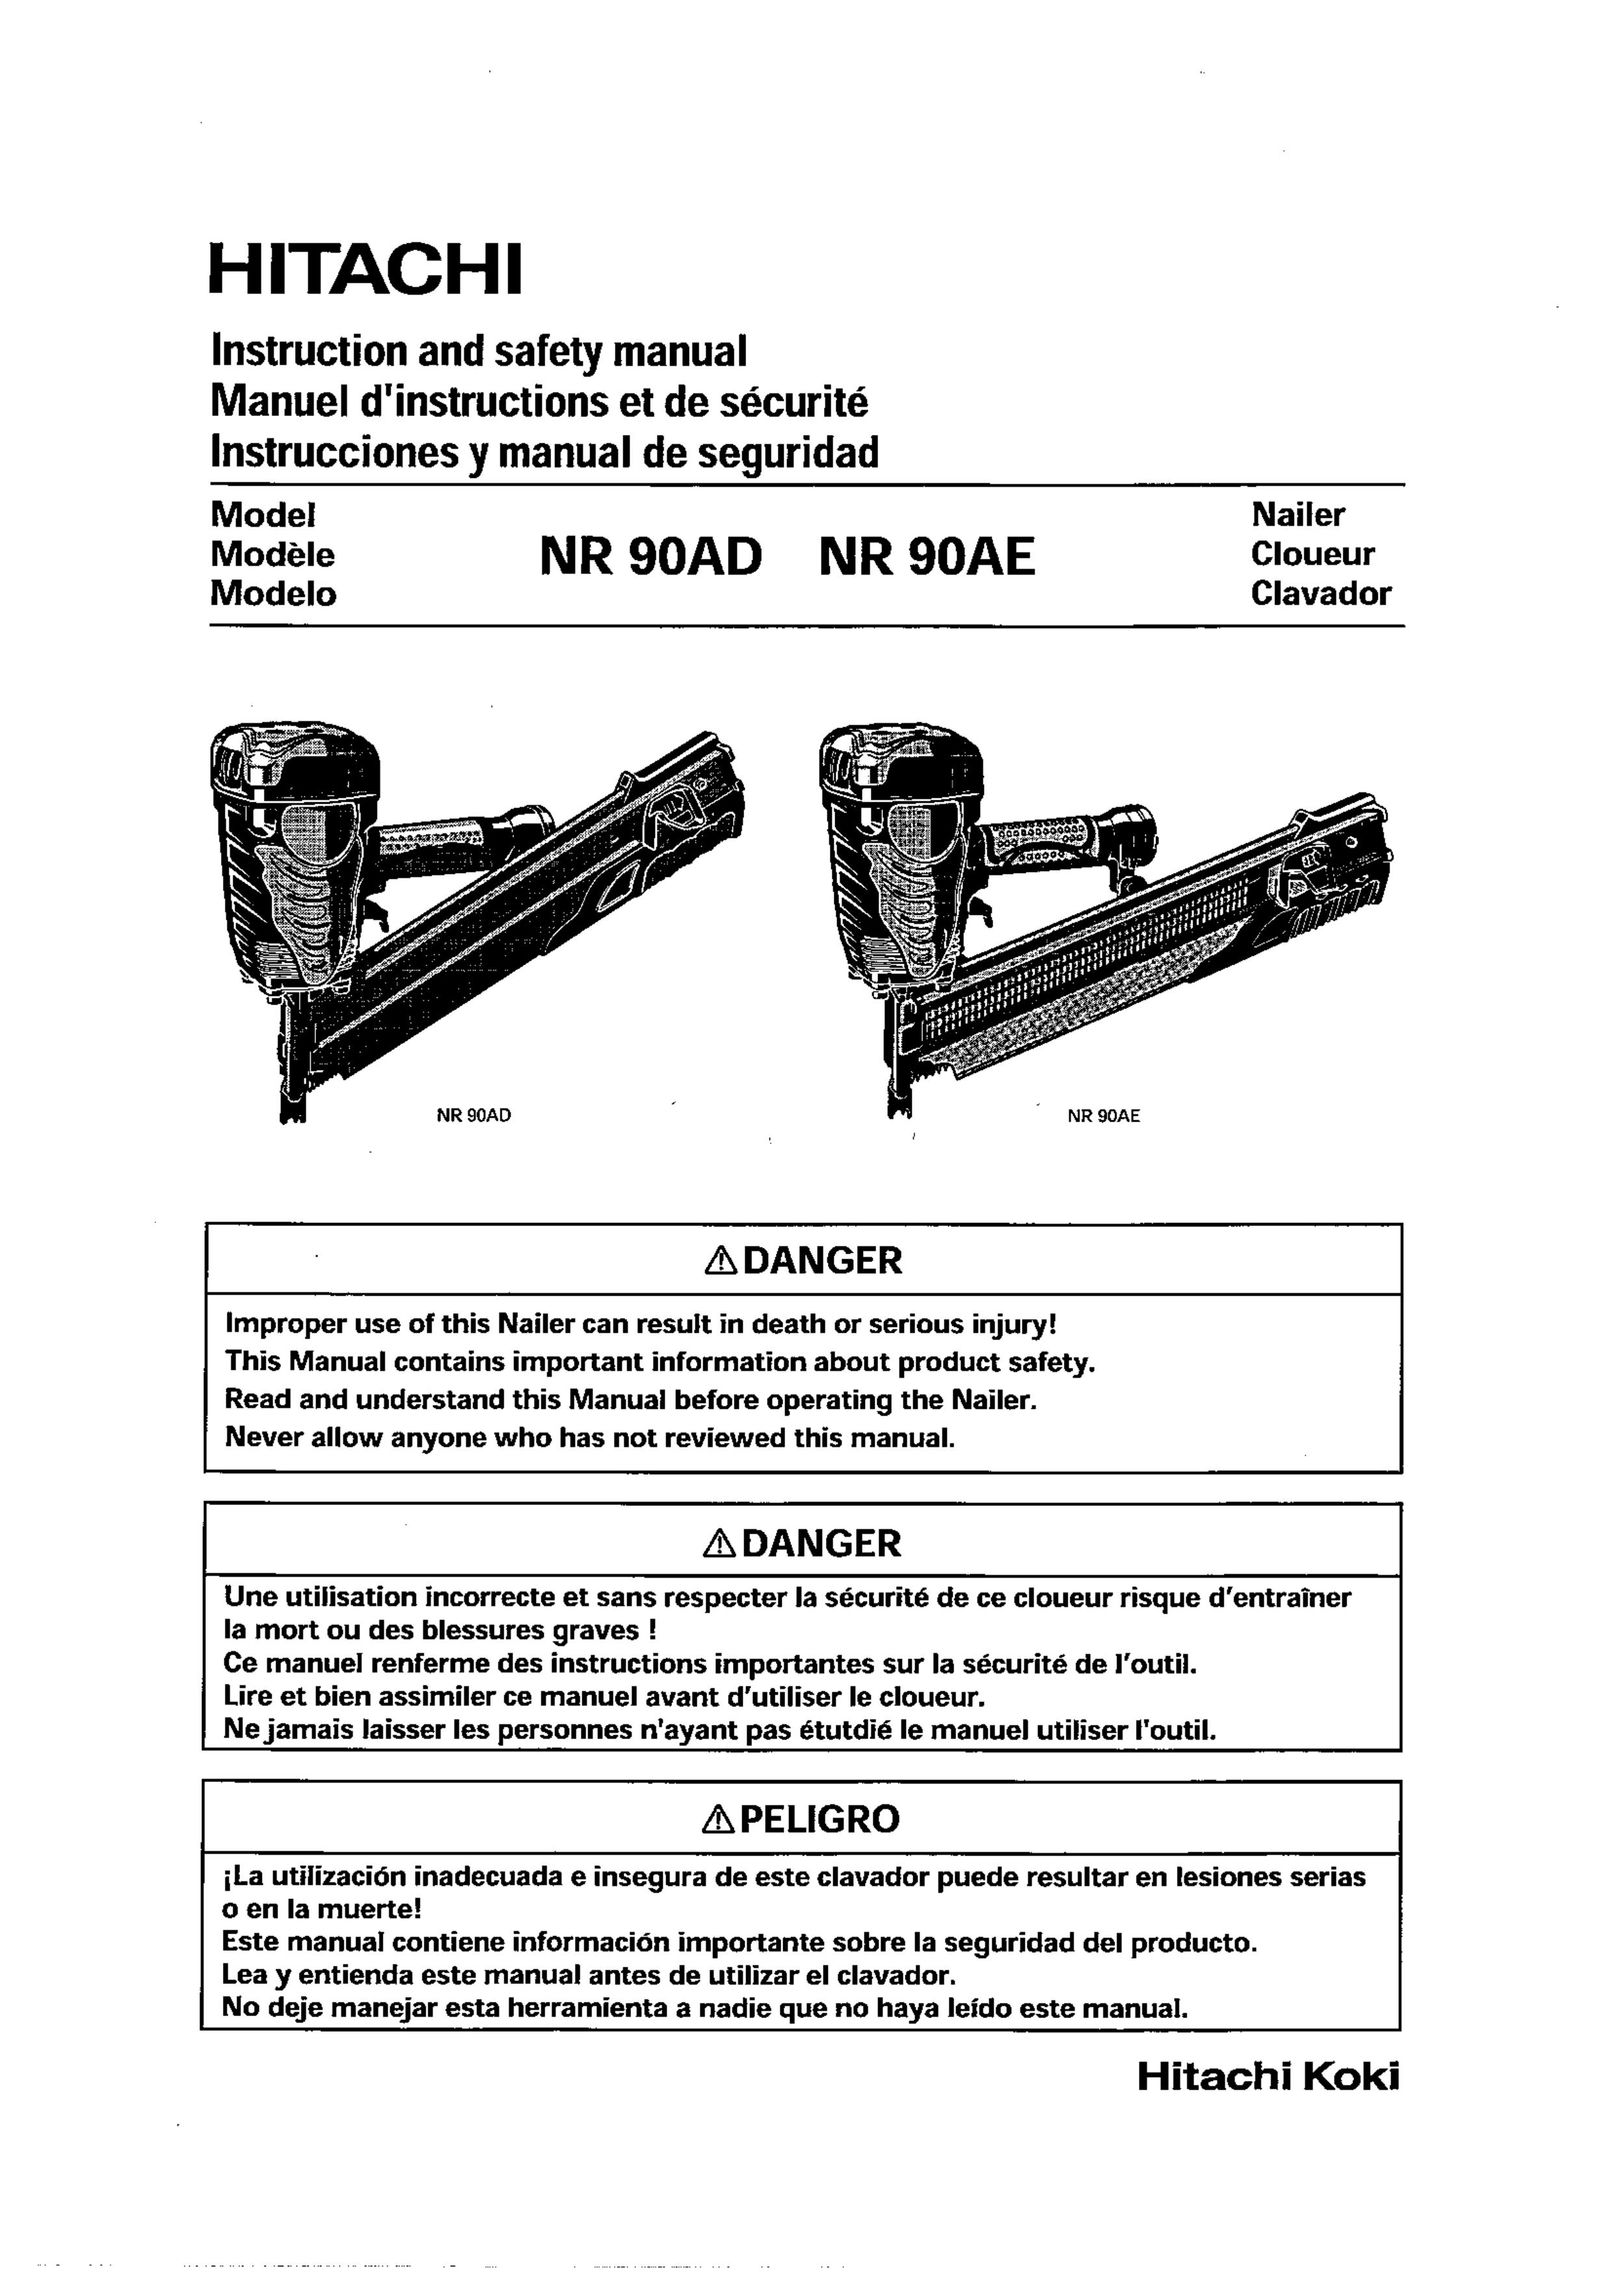 Hitachi Koki USA NR 90AE Nail Gun User Manual